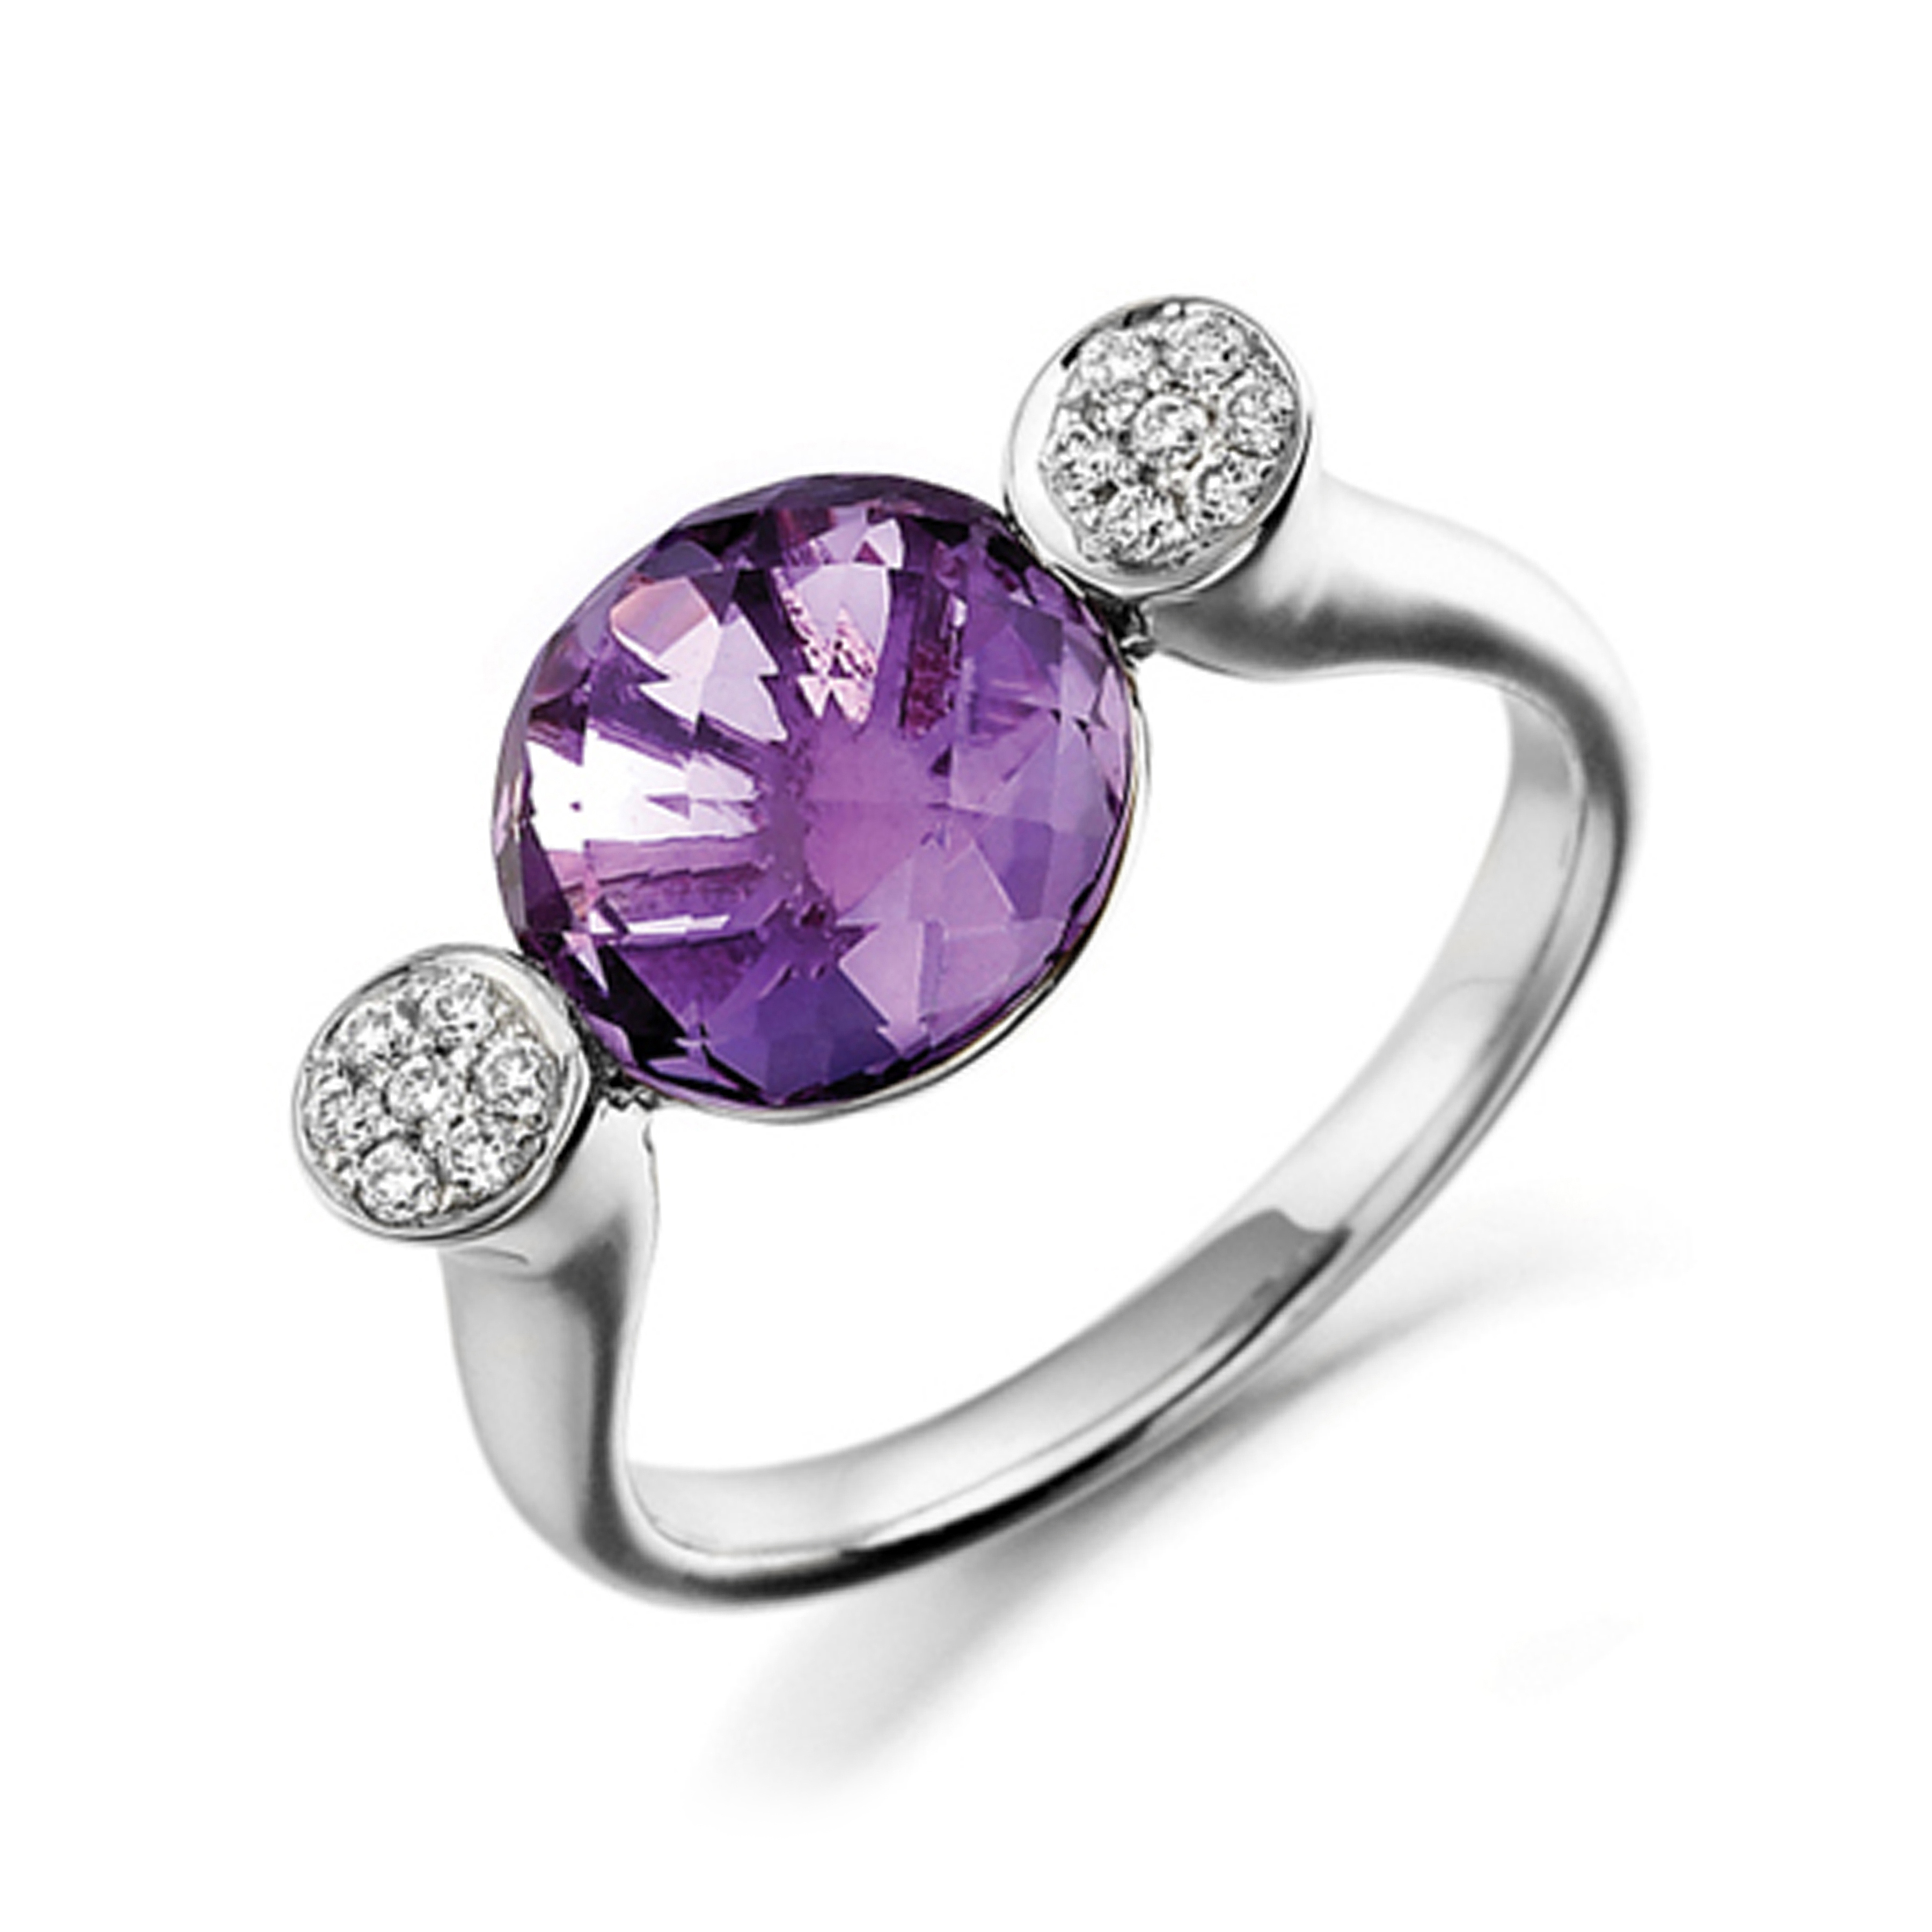 10mm Round Amethyst Side Stone Shoulder Diamond And Gemstone Engagement Ring